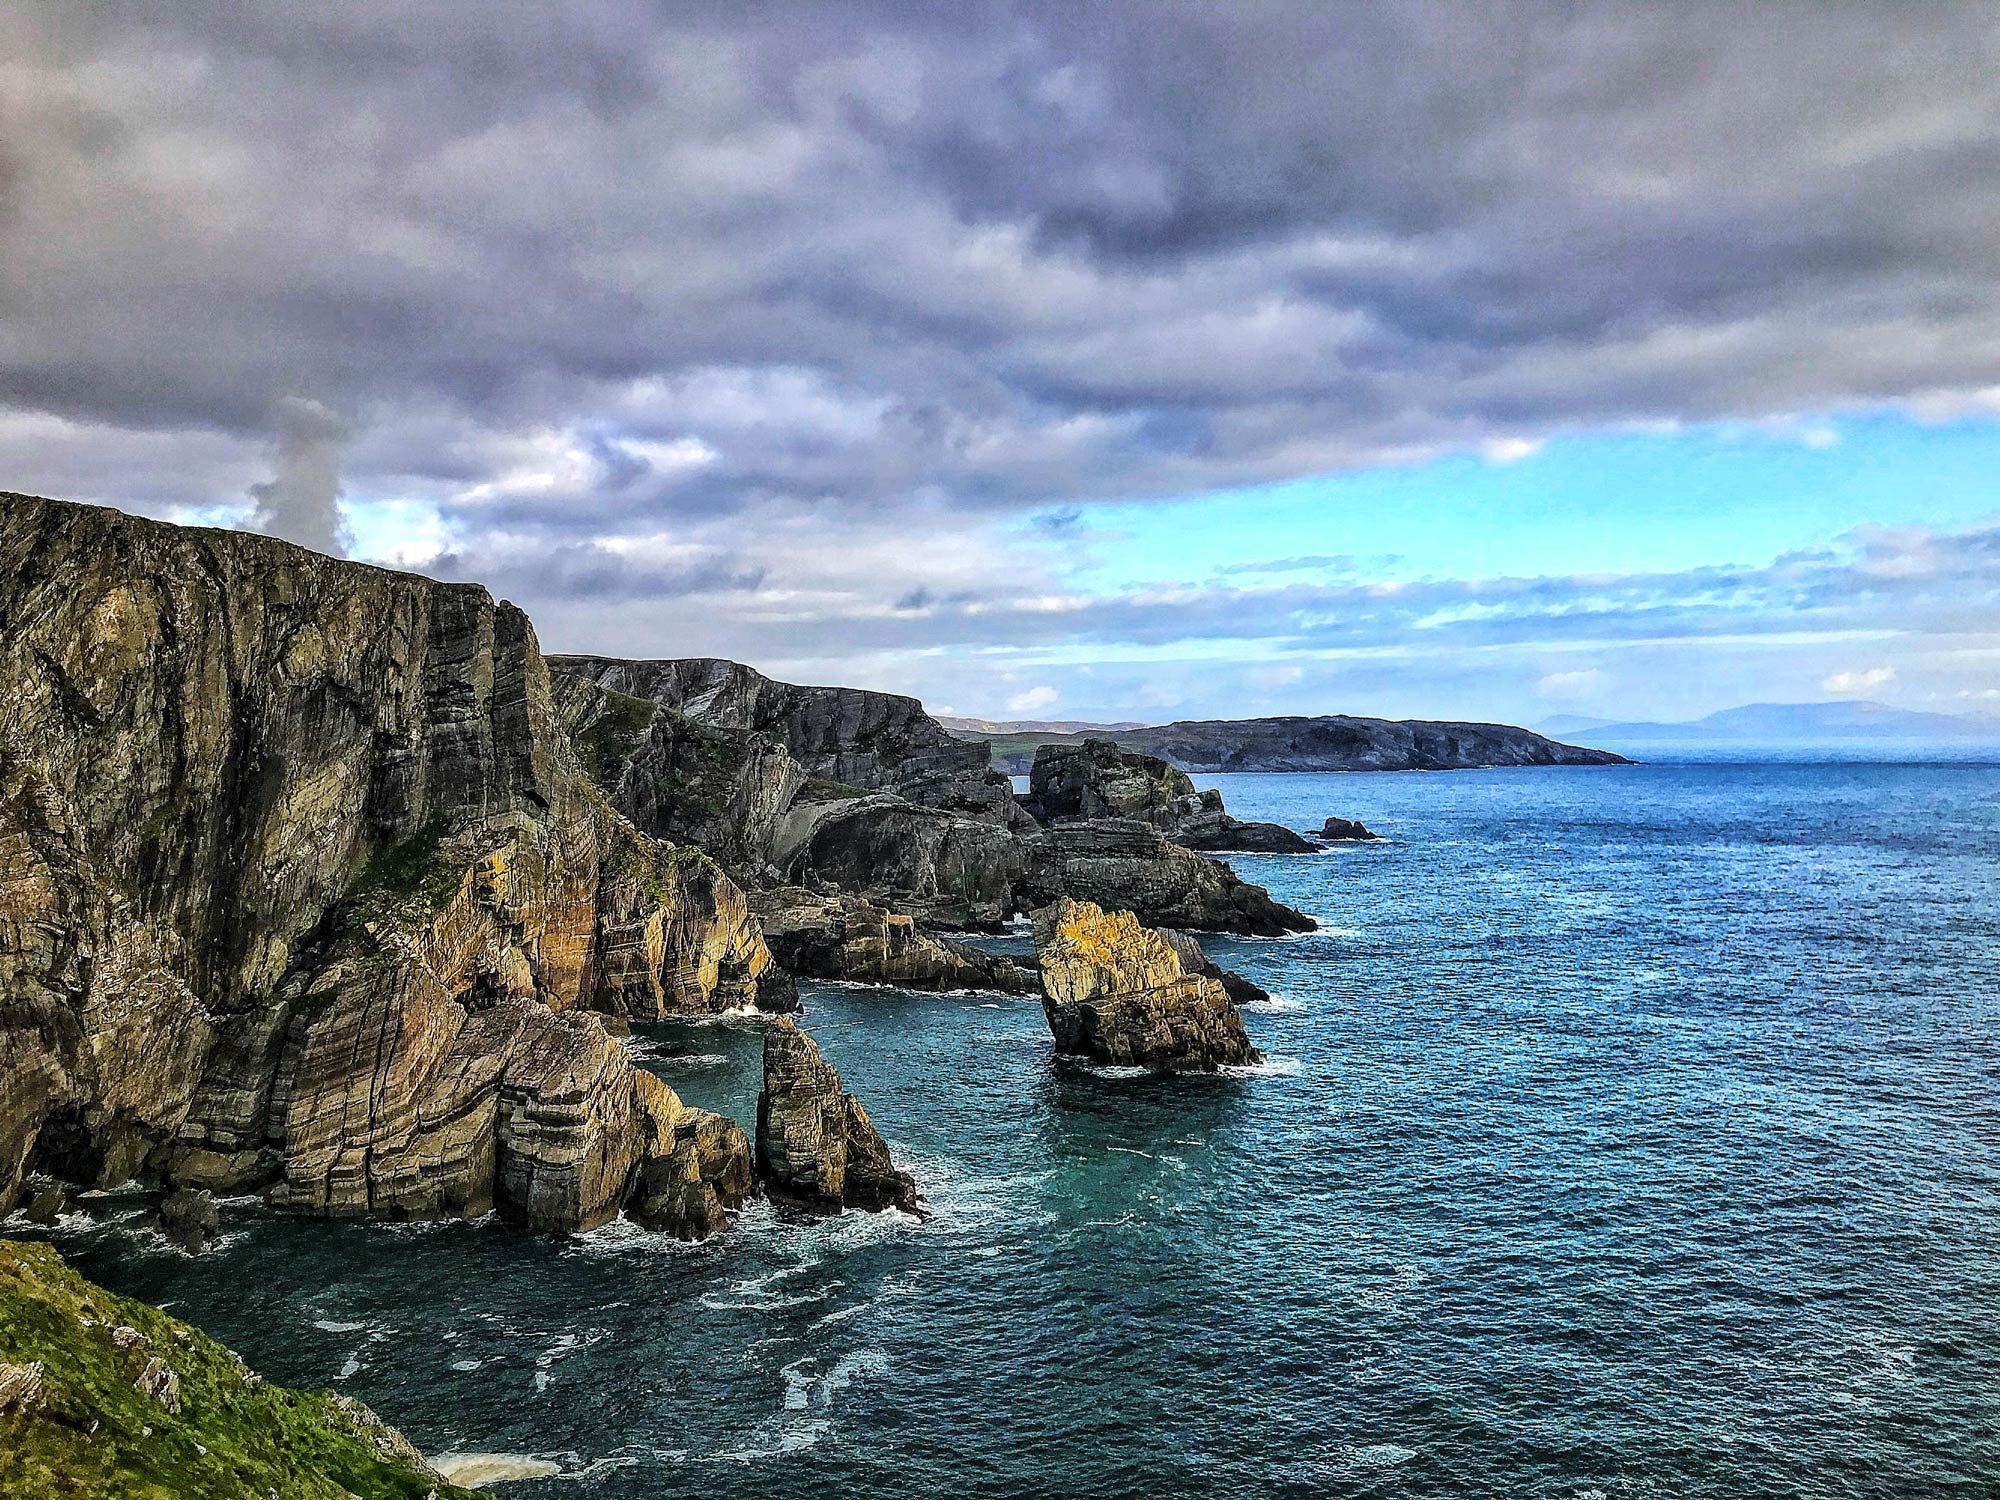 View along rocky granite cliffs, as land meets ocean